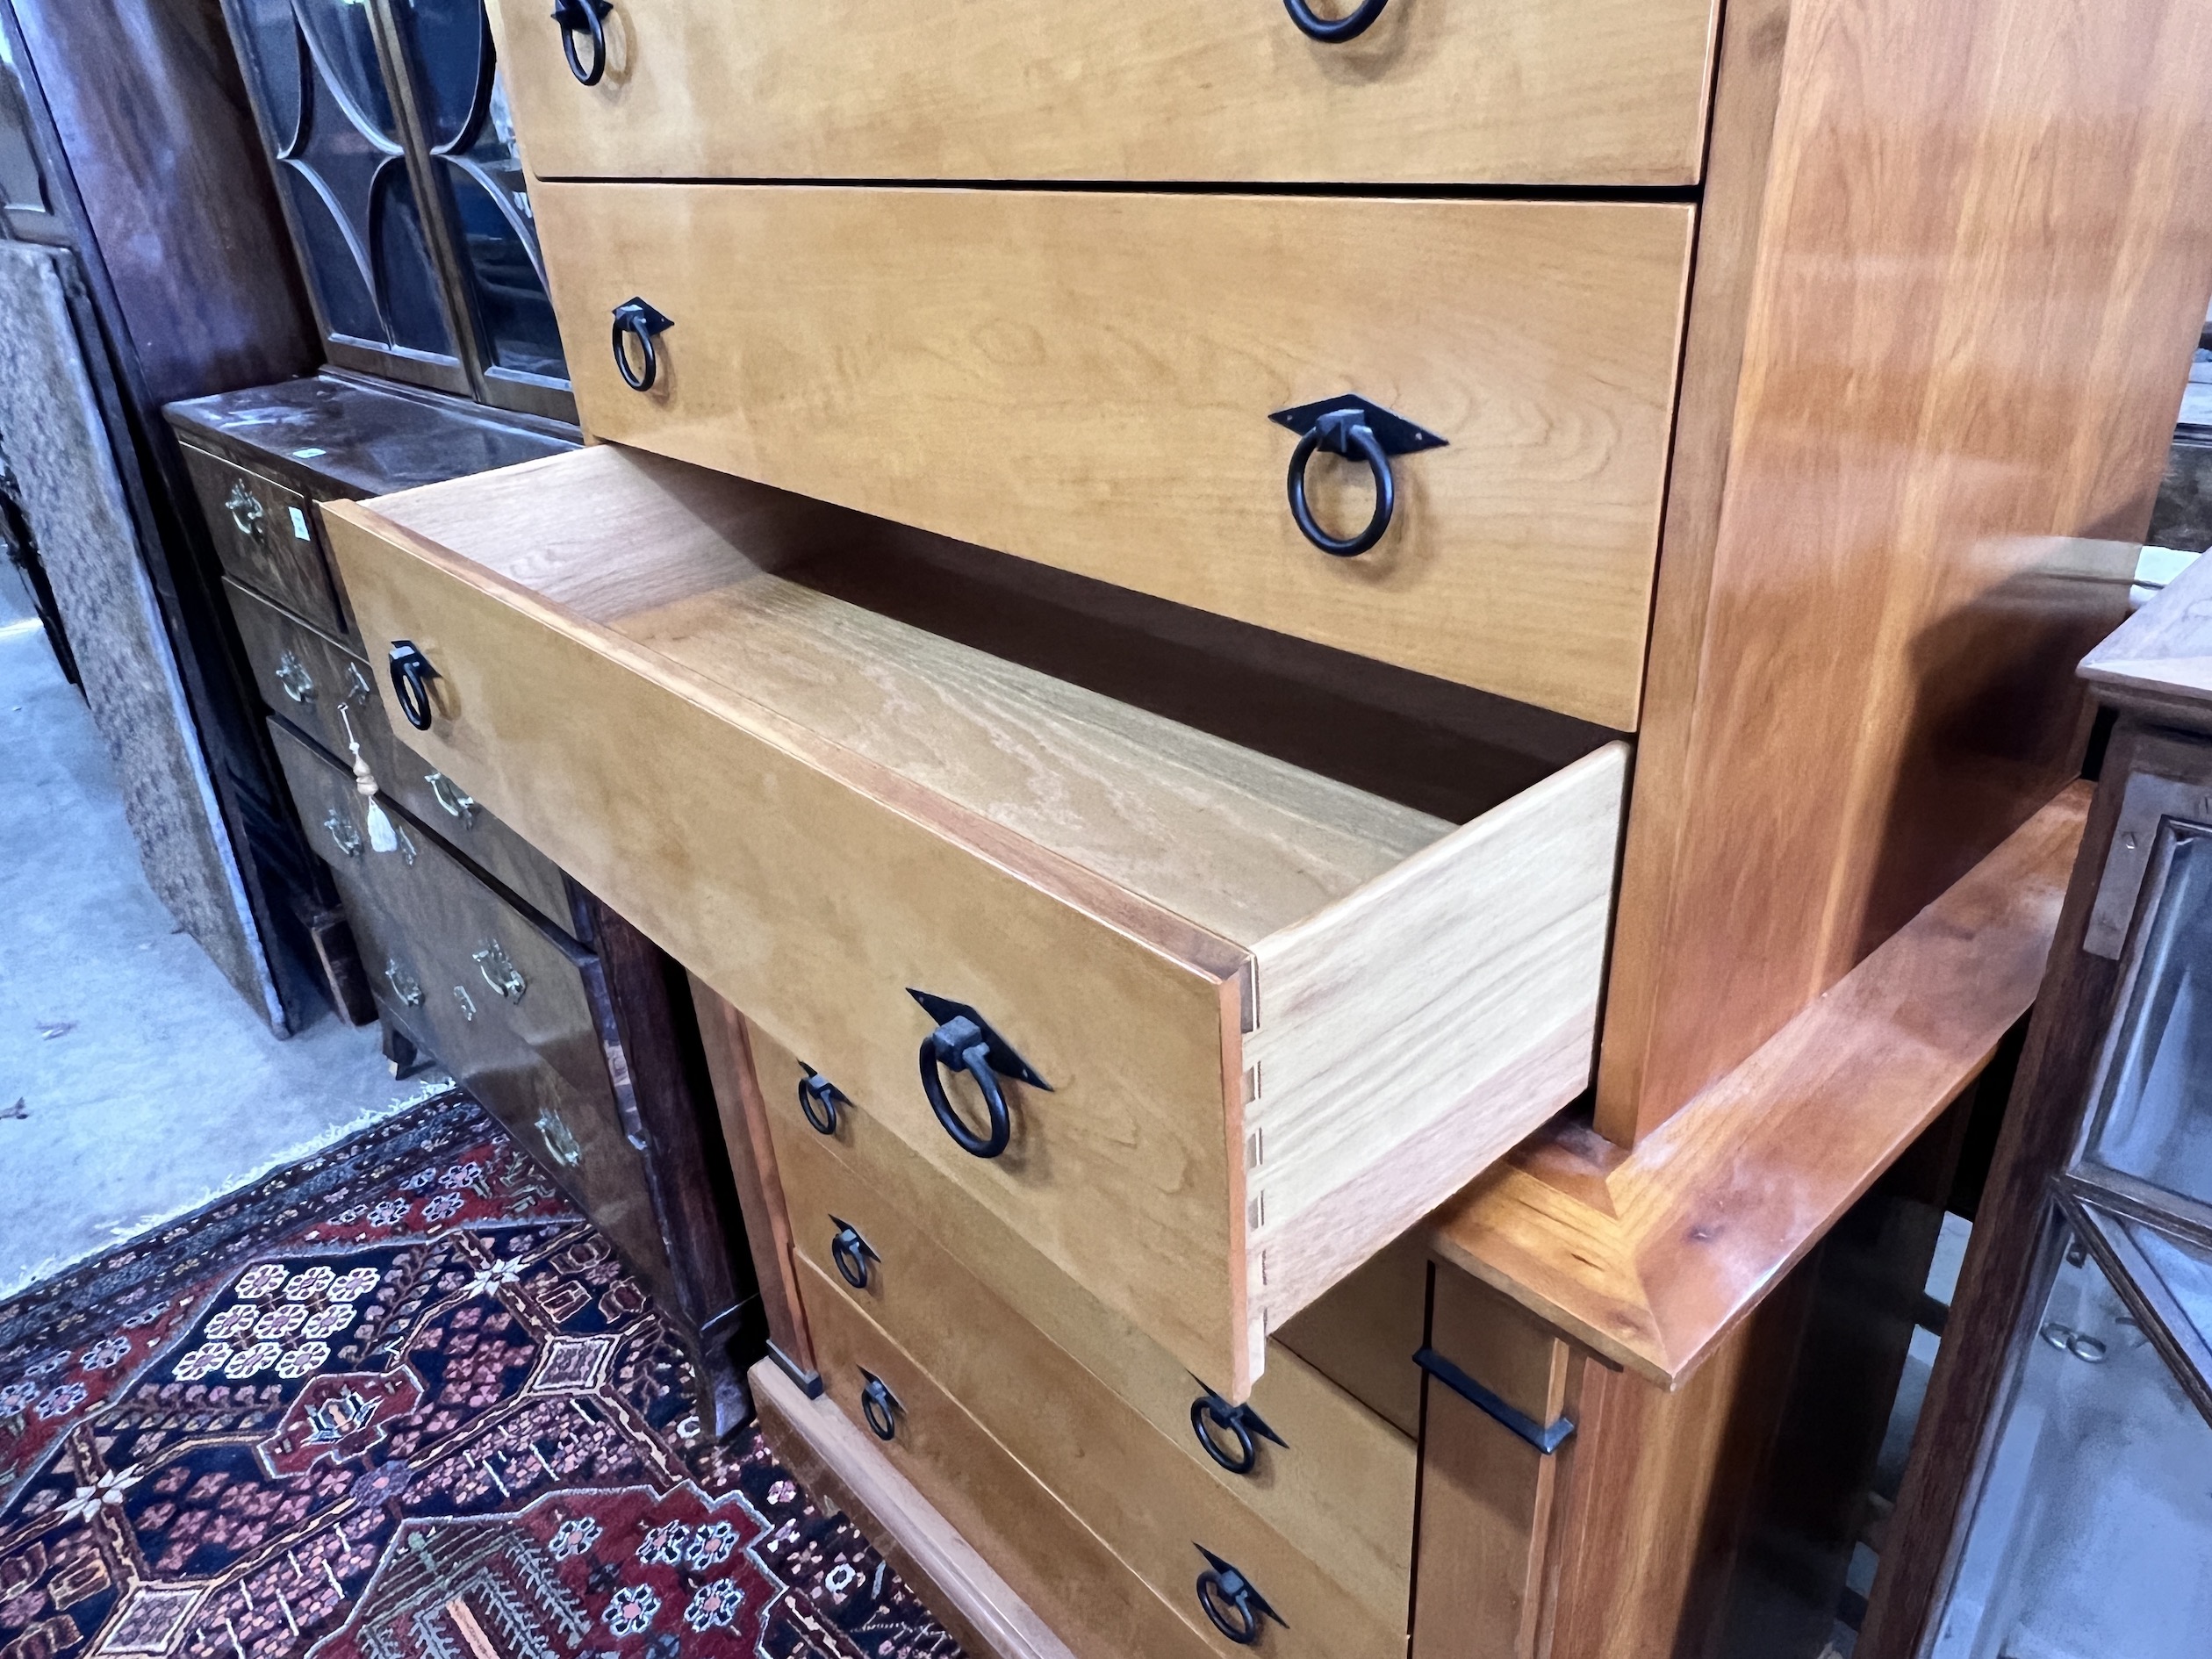 A Biedermeier style bois clair eight drawer chest on chest, width 104cm, depth 55cm, height 173cm